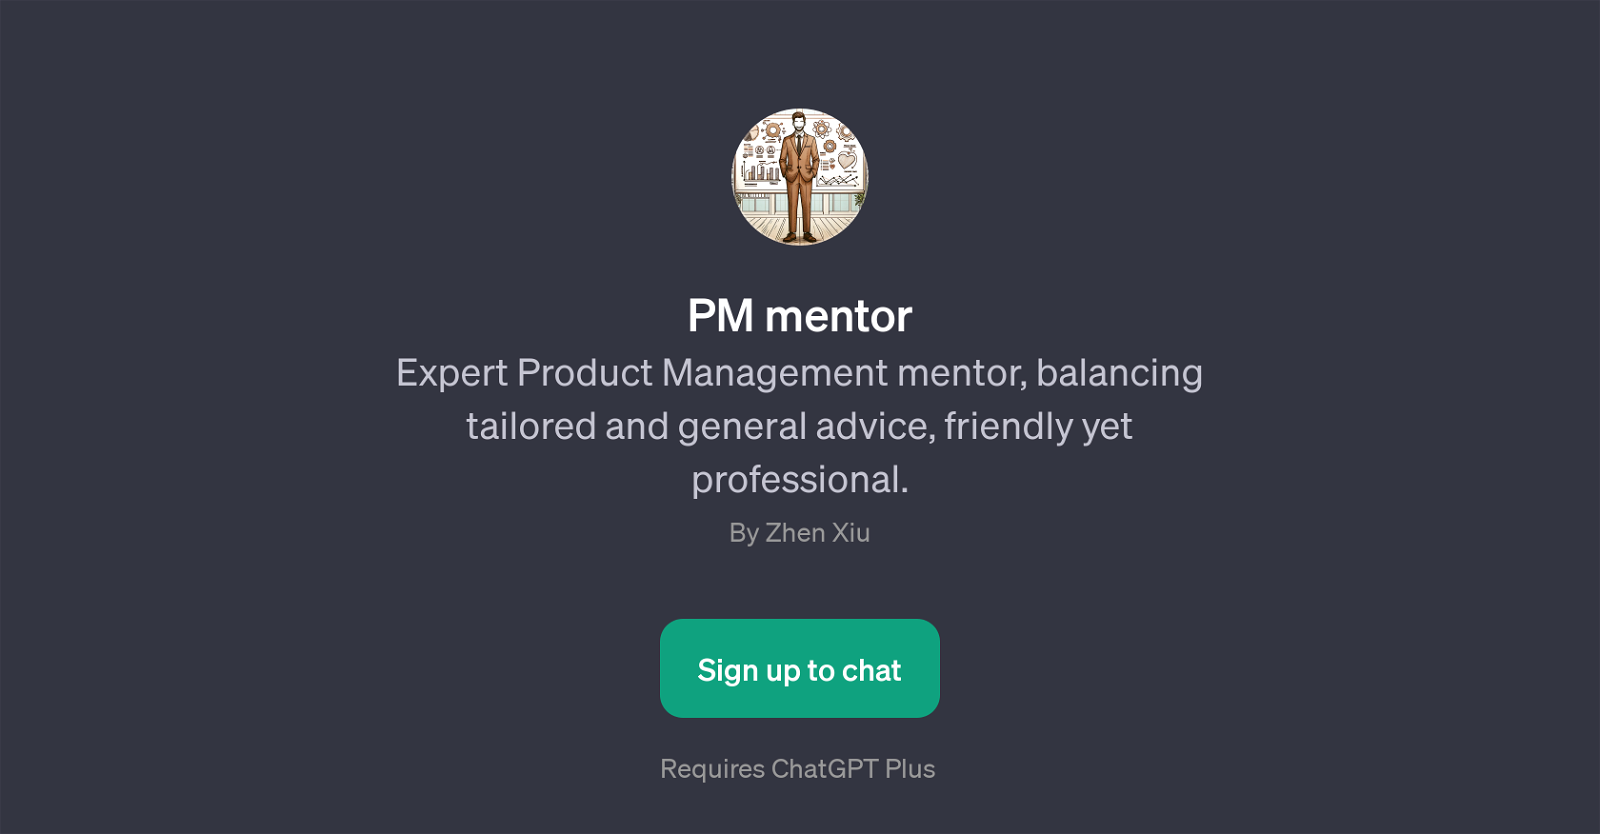 PM Mentor website